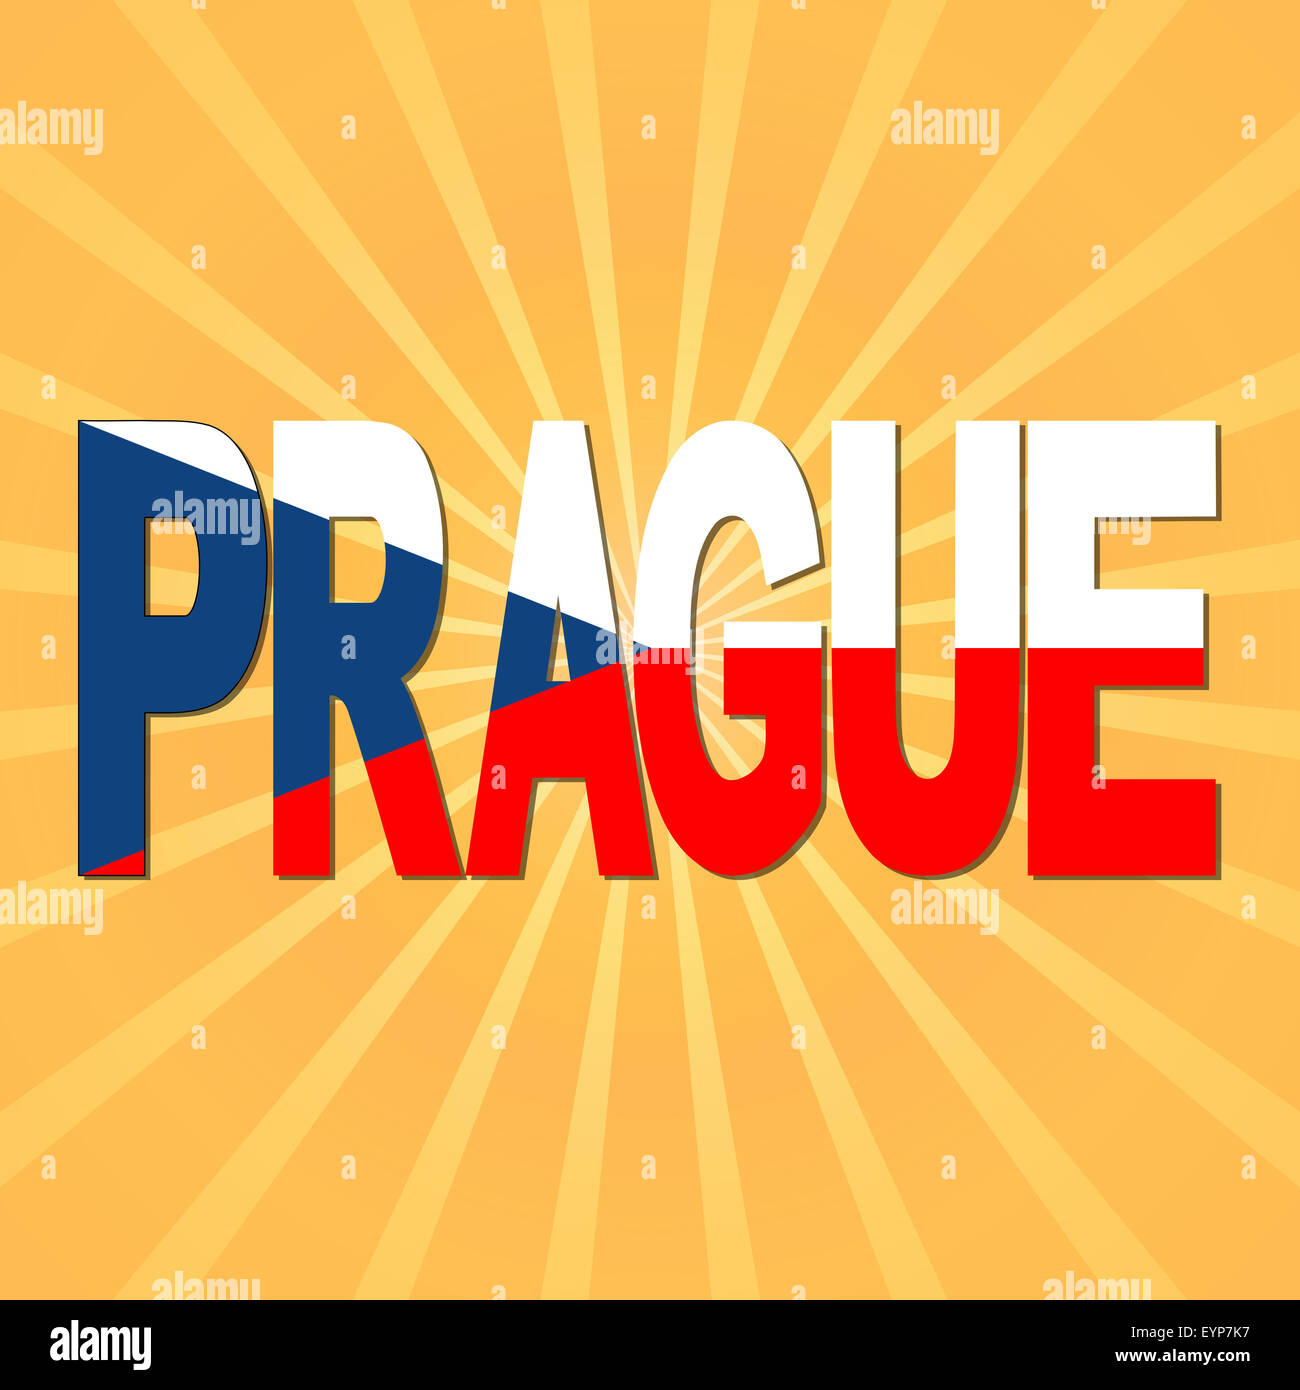 Prague flag text with sunburst illustration Stock Photo